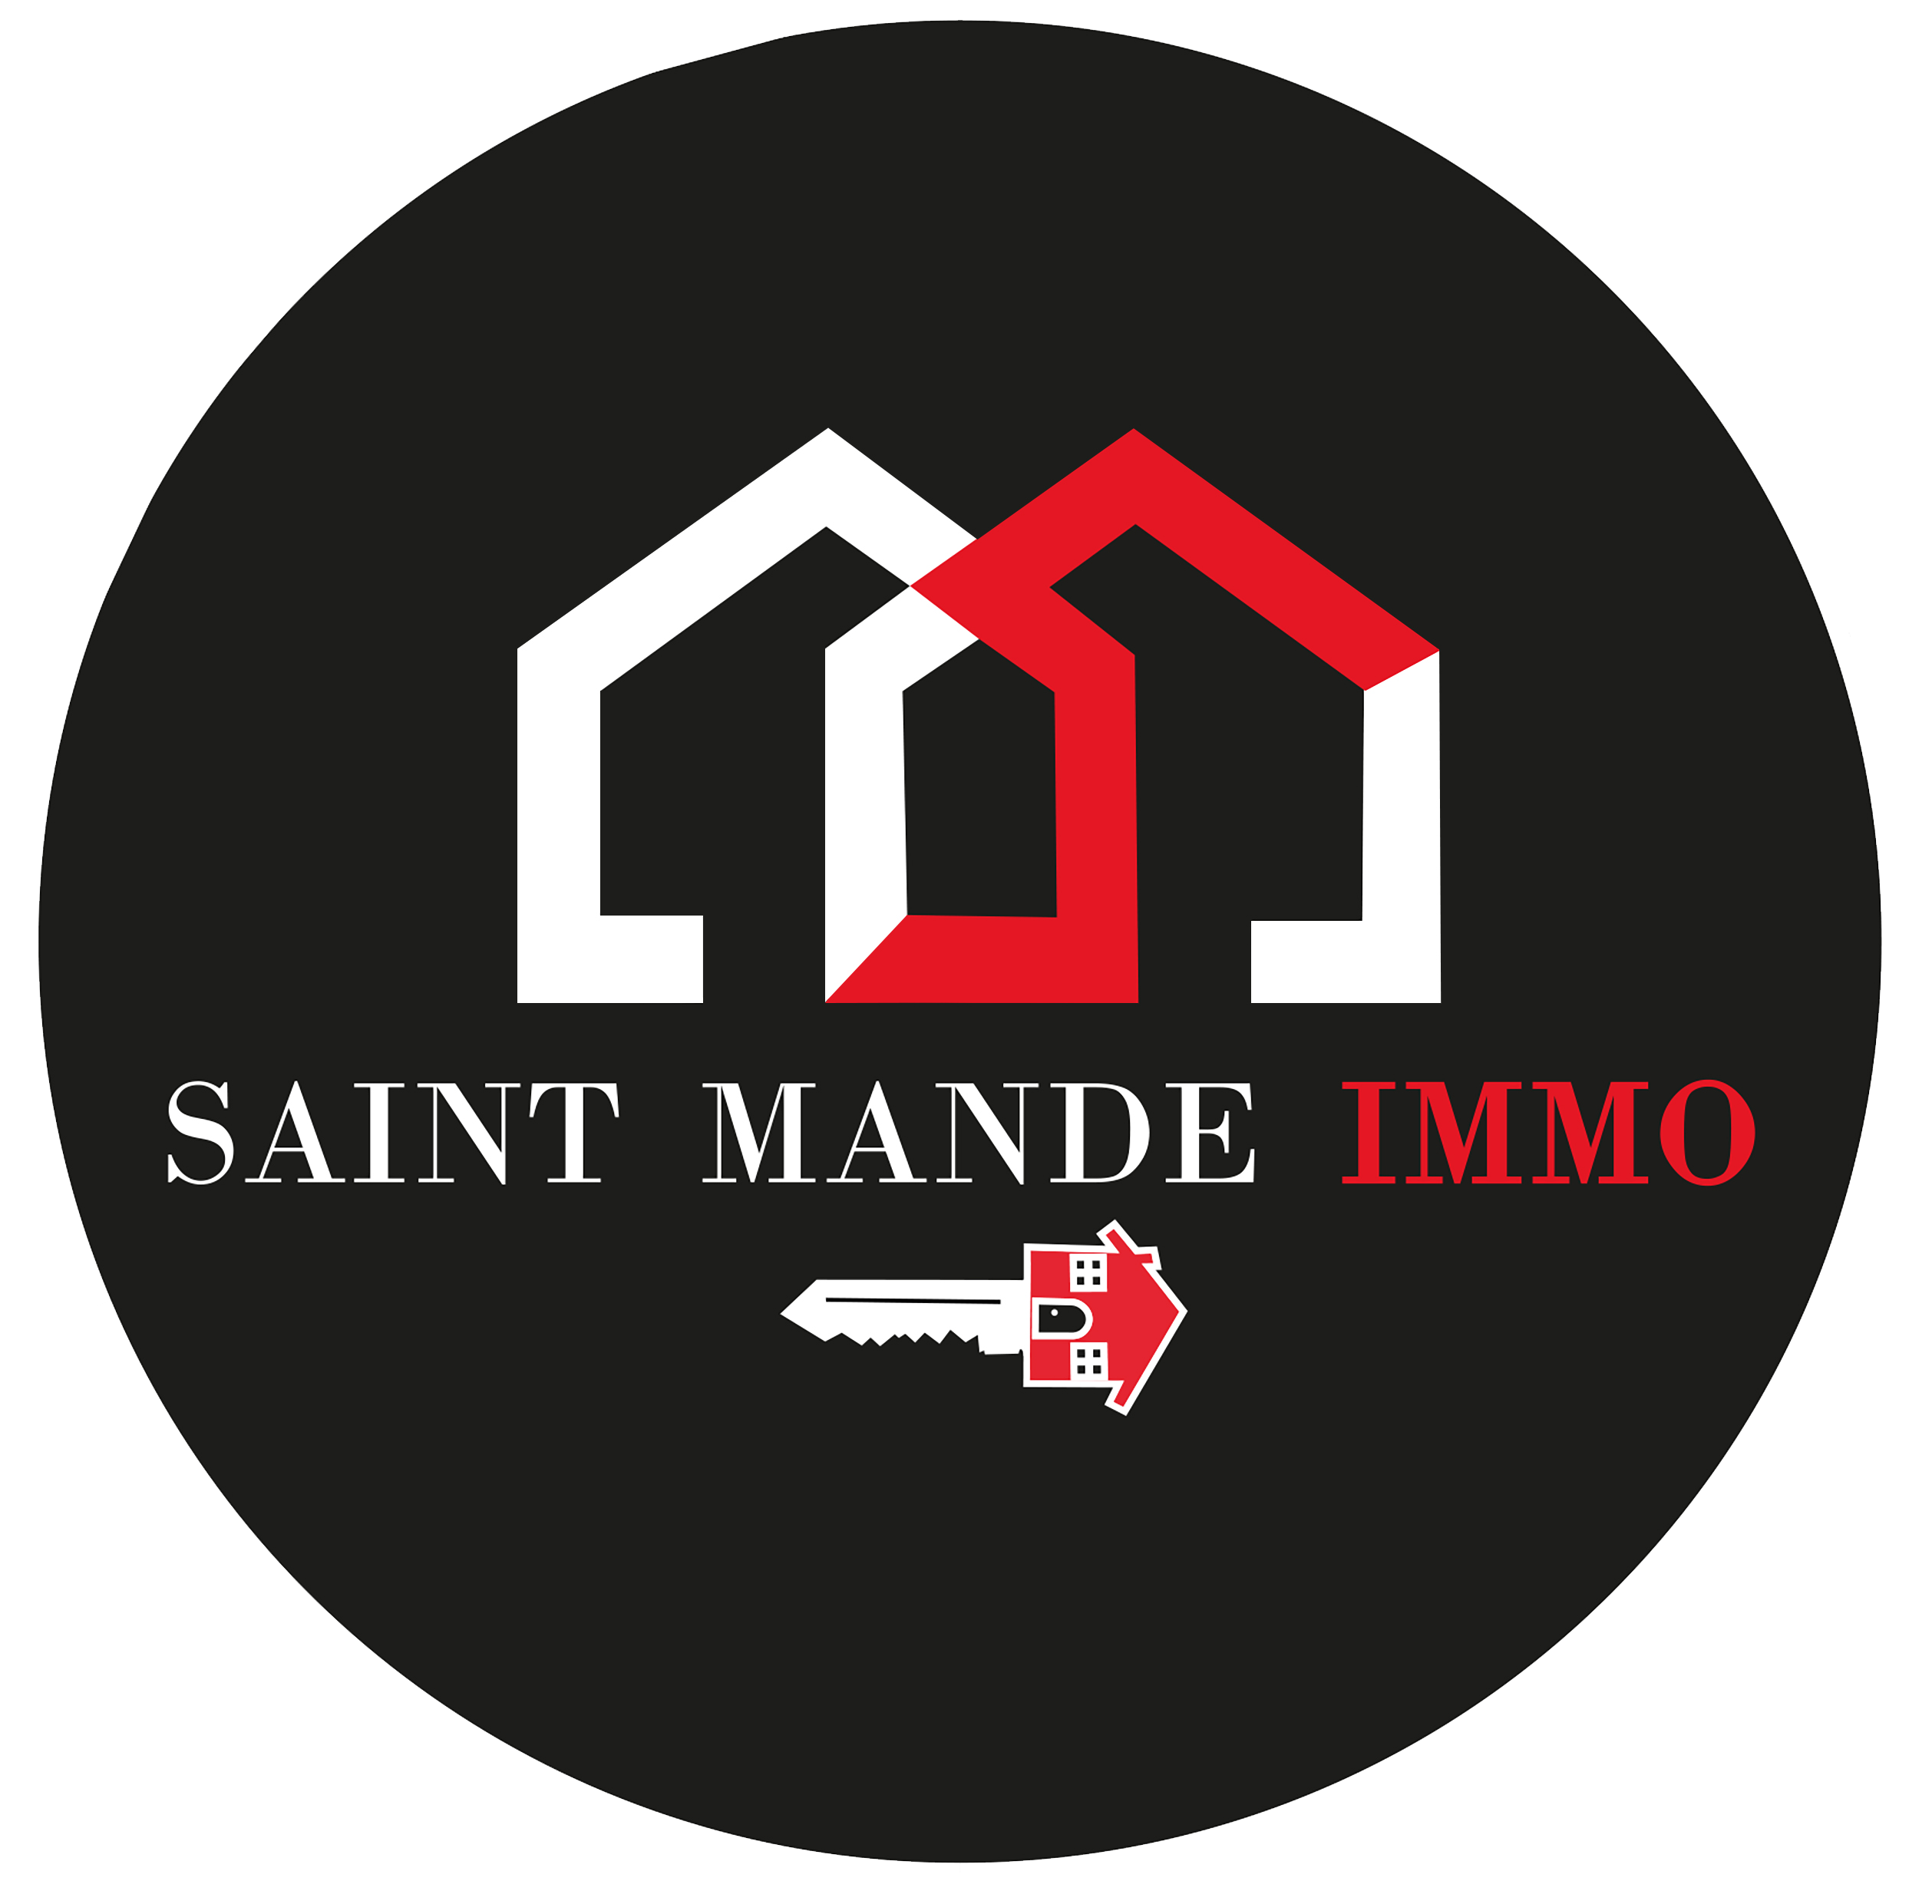 Saint Mandé Immo